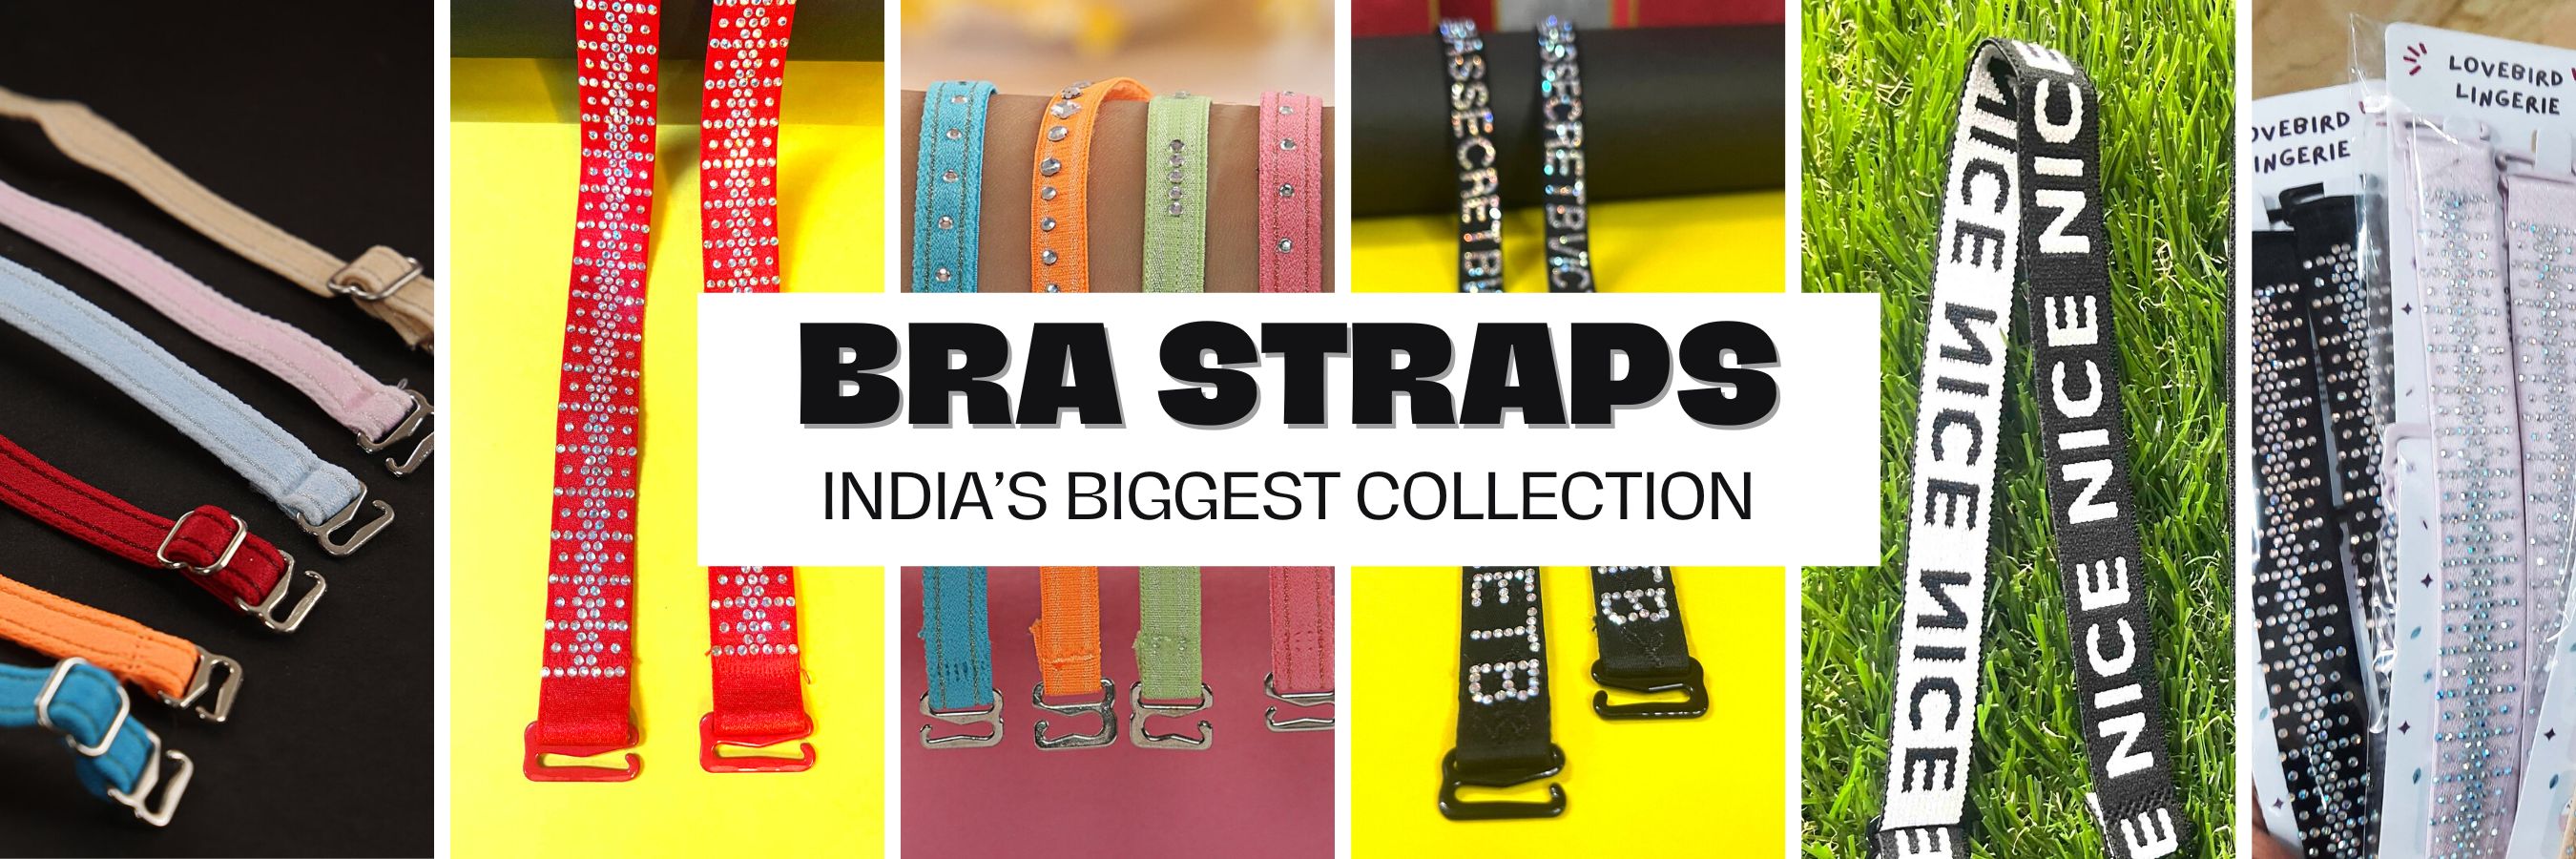 Bra Straps - Bra Transparent Steps Online in India